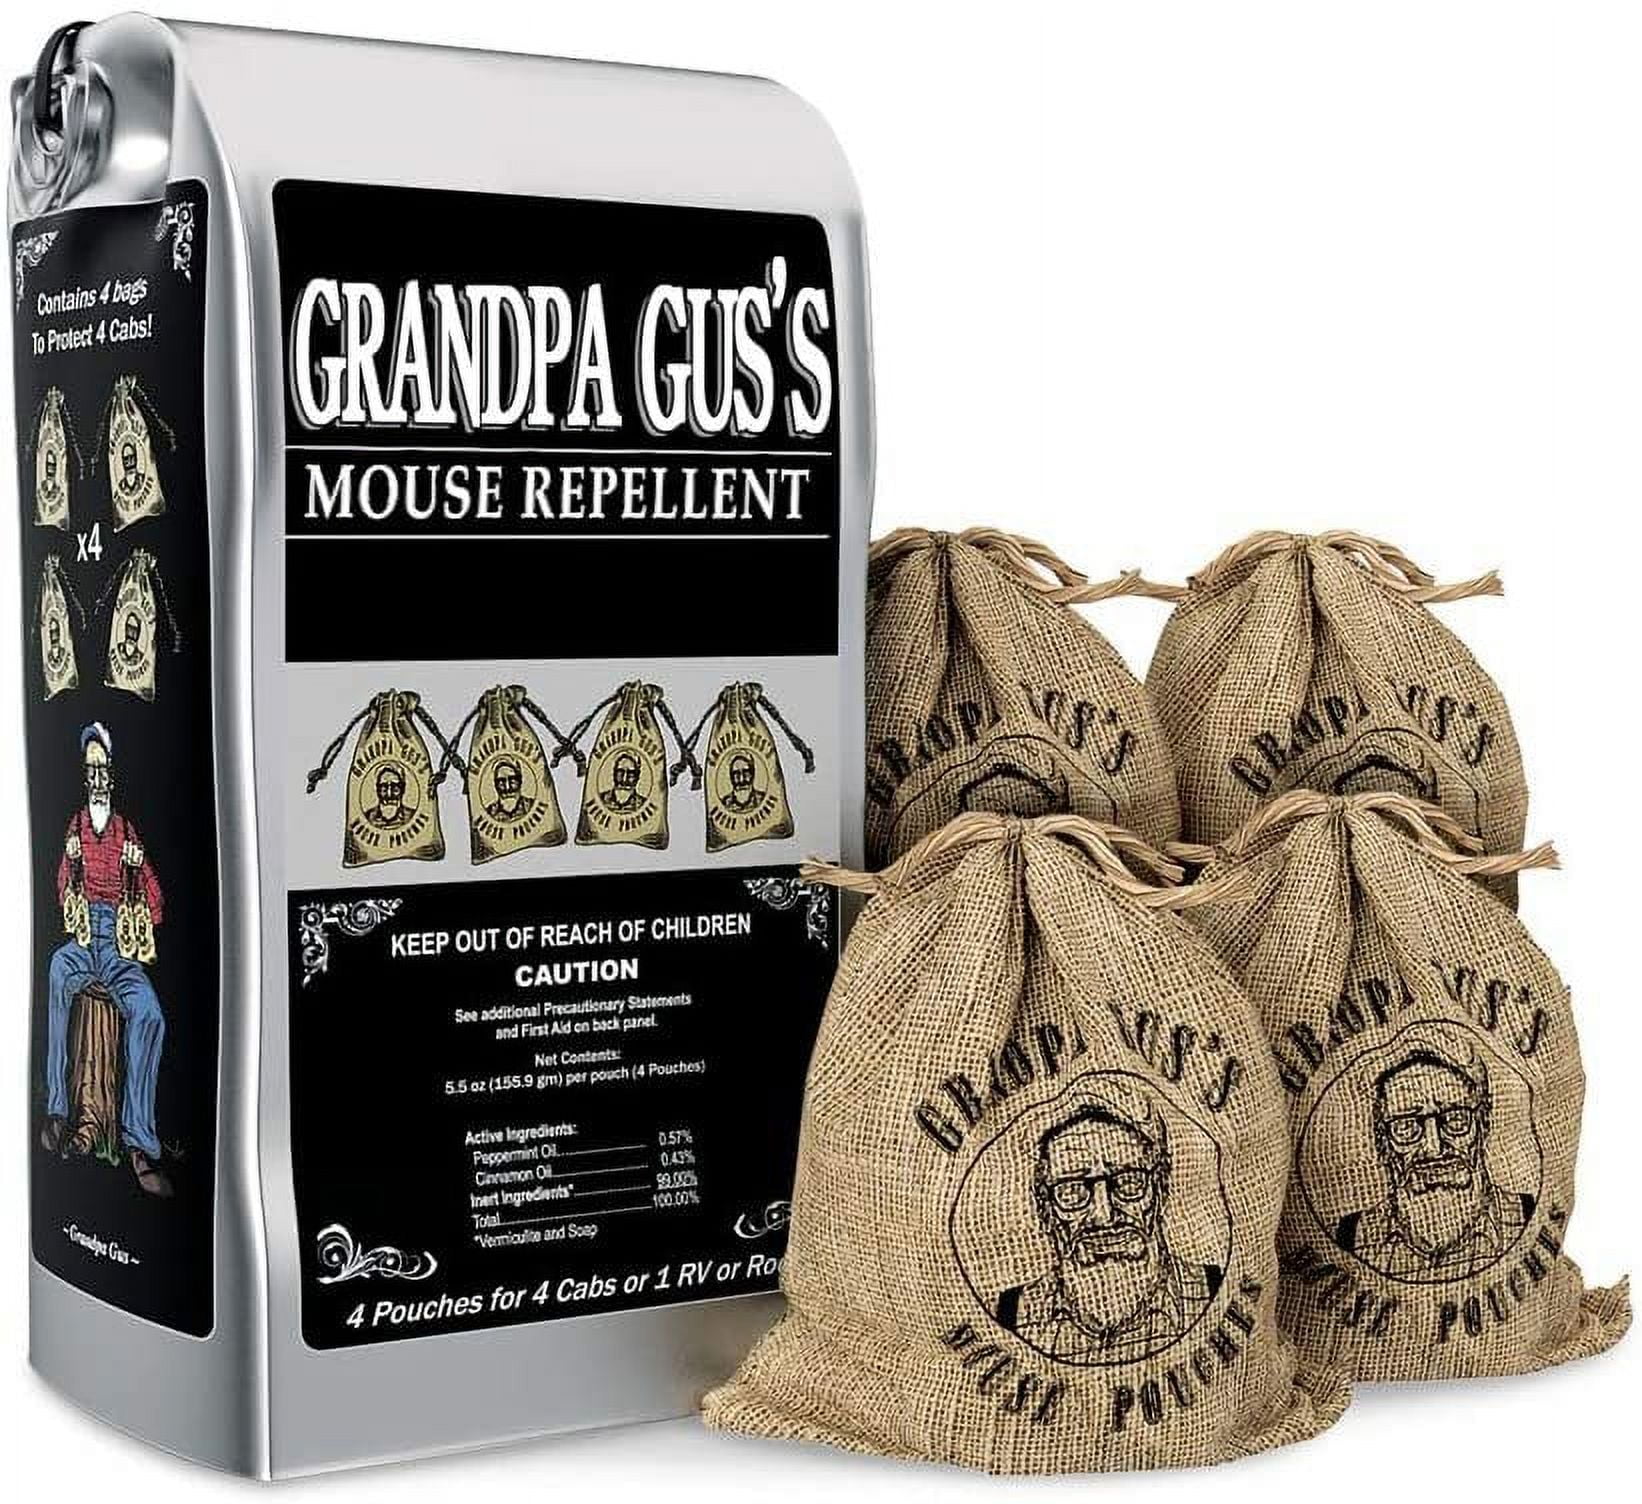 Grandpa Gus's Mouse Pouches